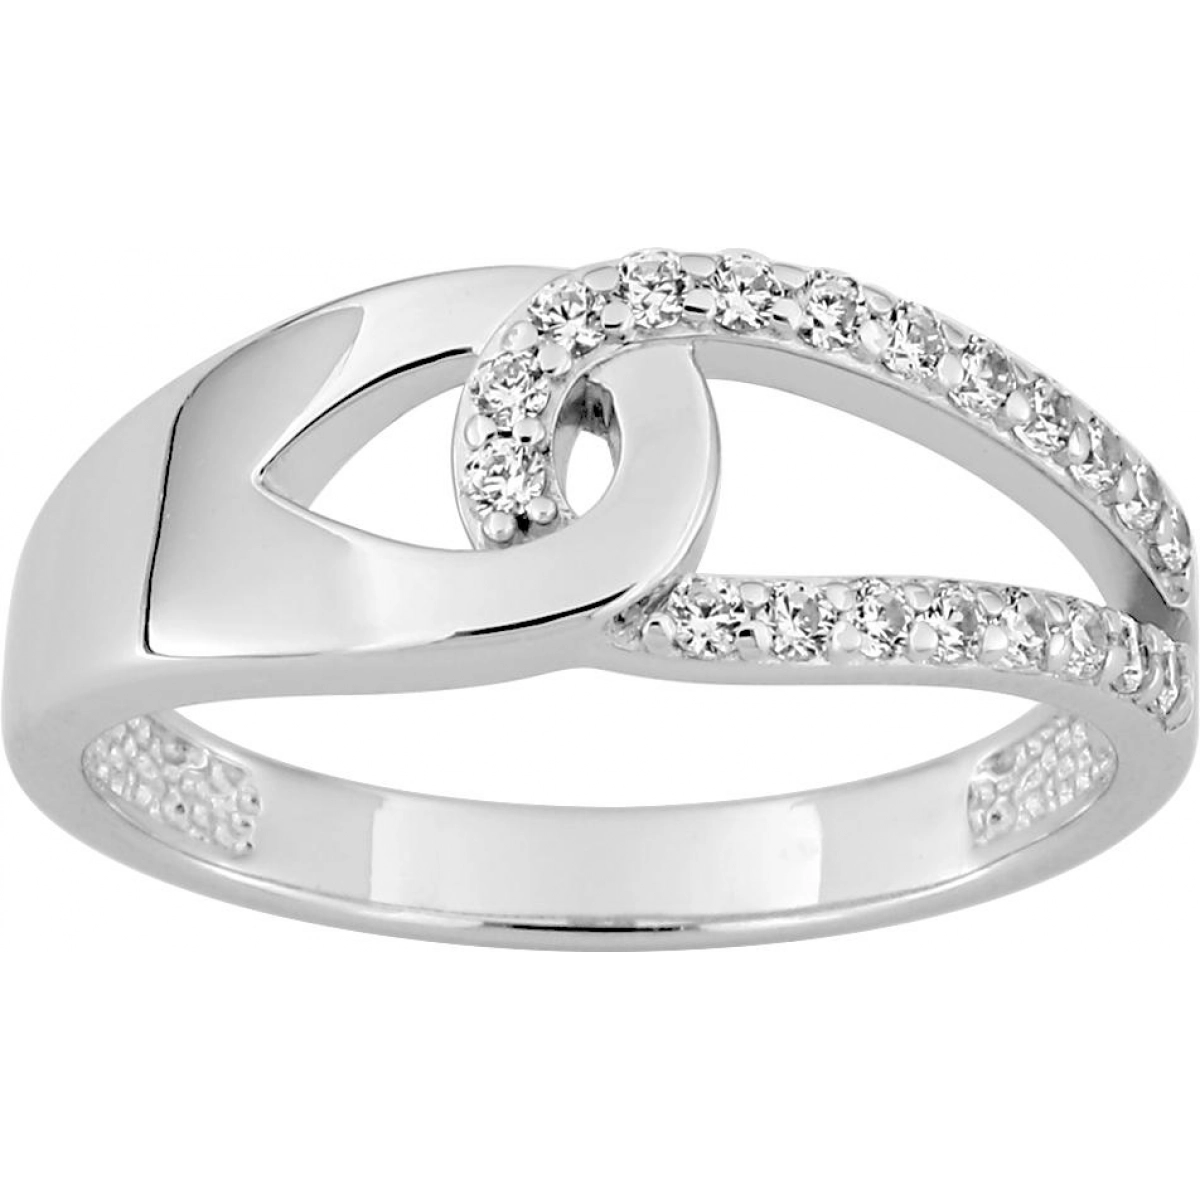 Ring w. cz rh925 Silver Lua Blanca  450450.9 - Size 60